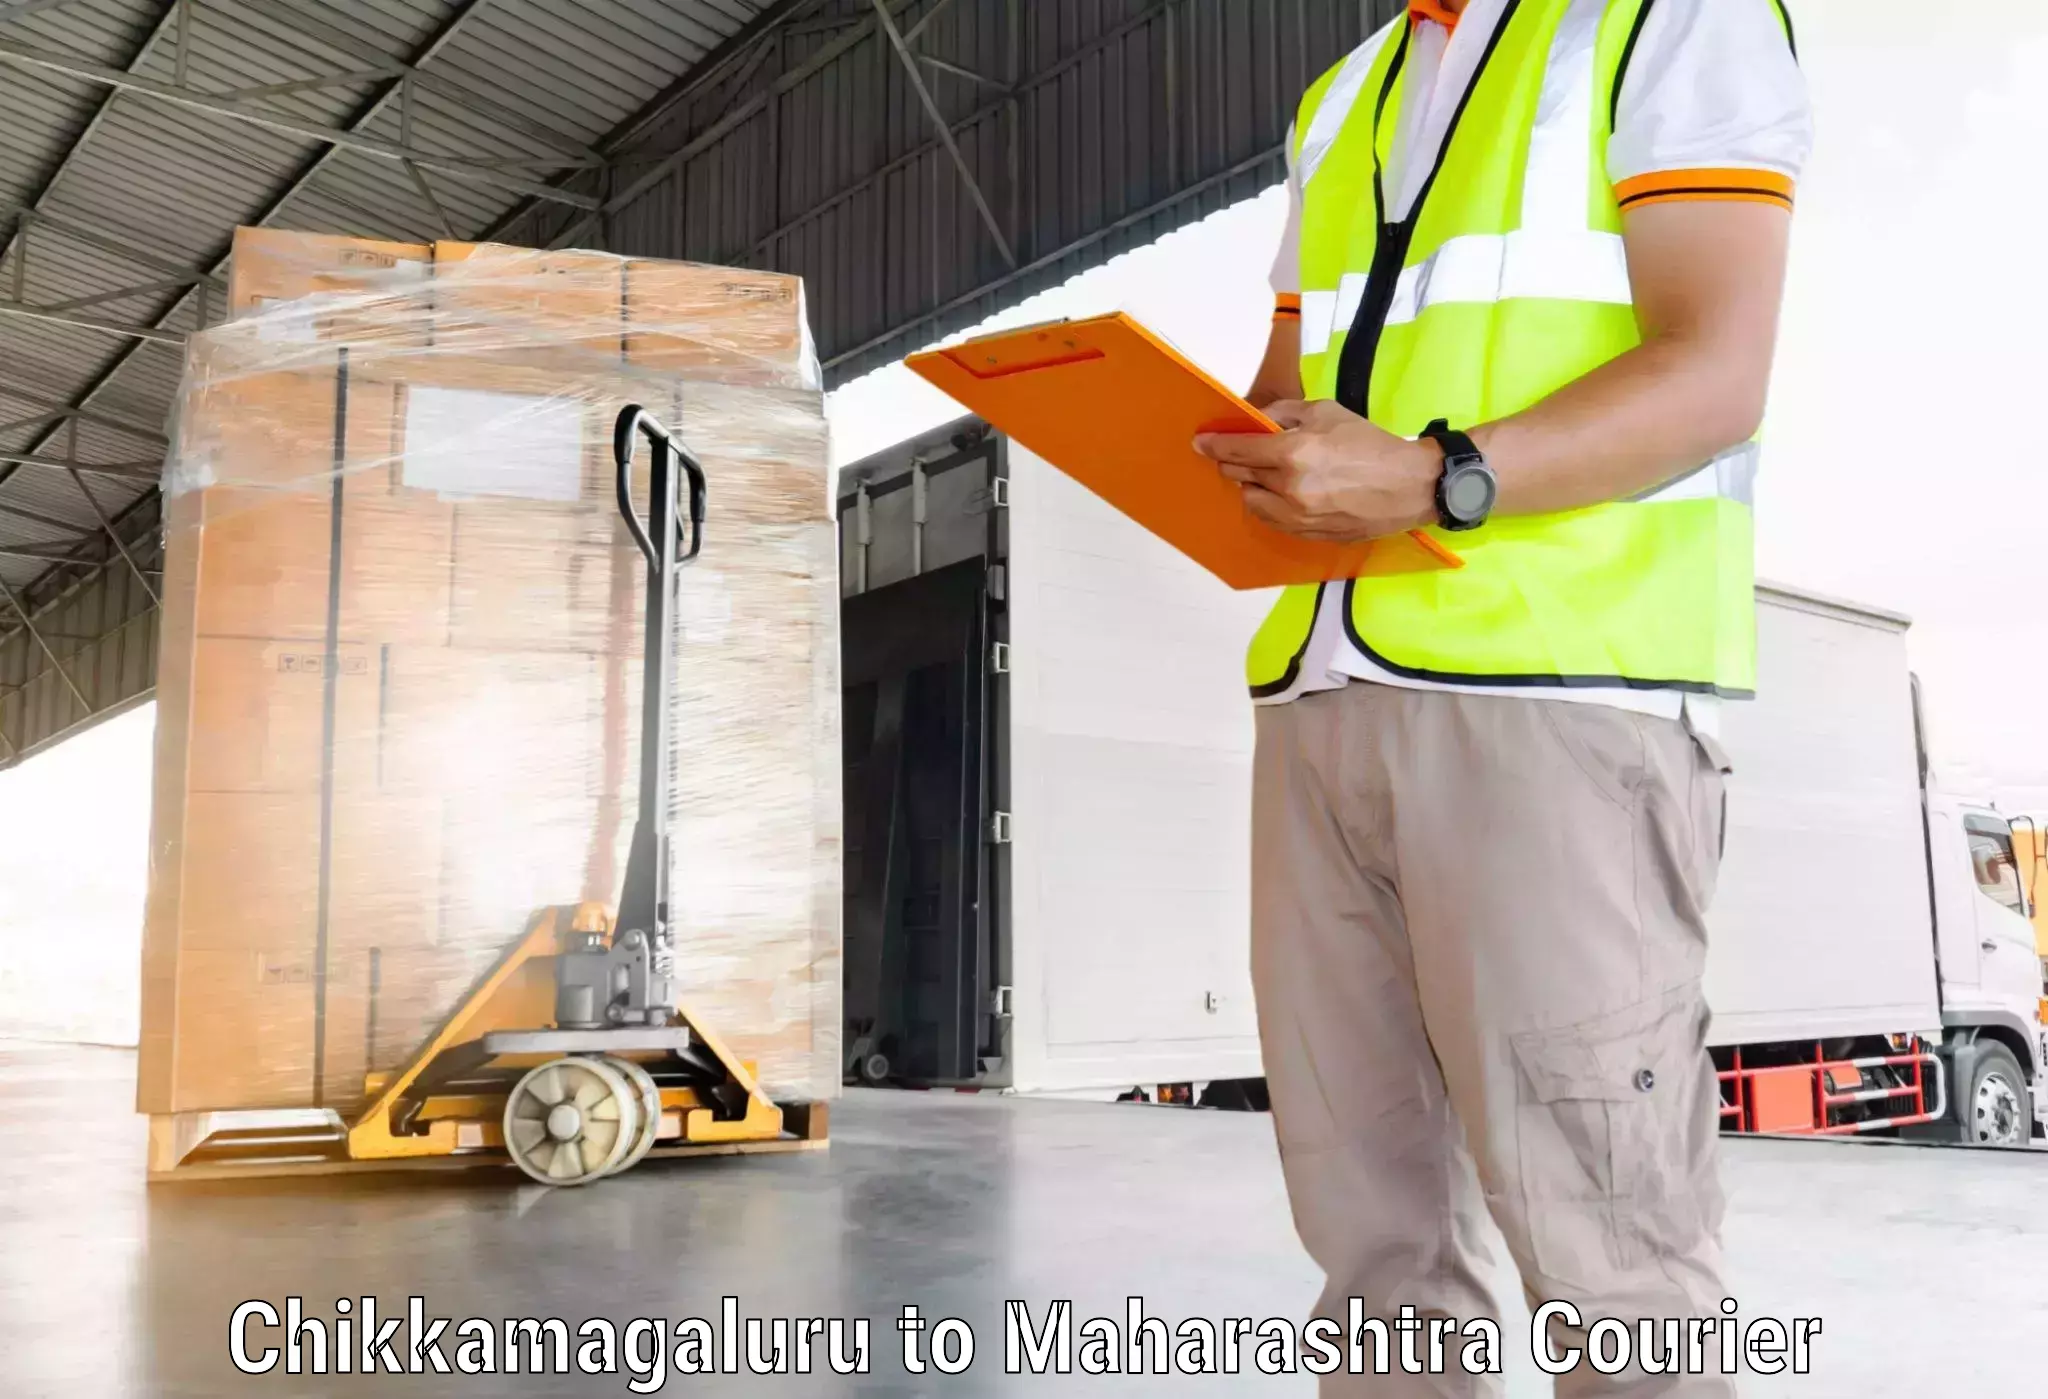 Courier service comparison Chikkamagaluru to Mahabaleshwar